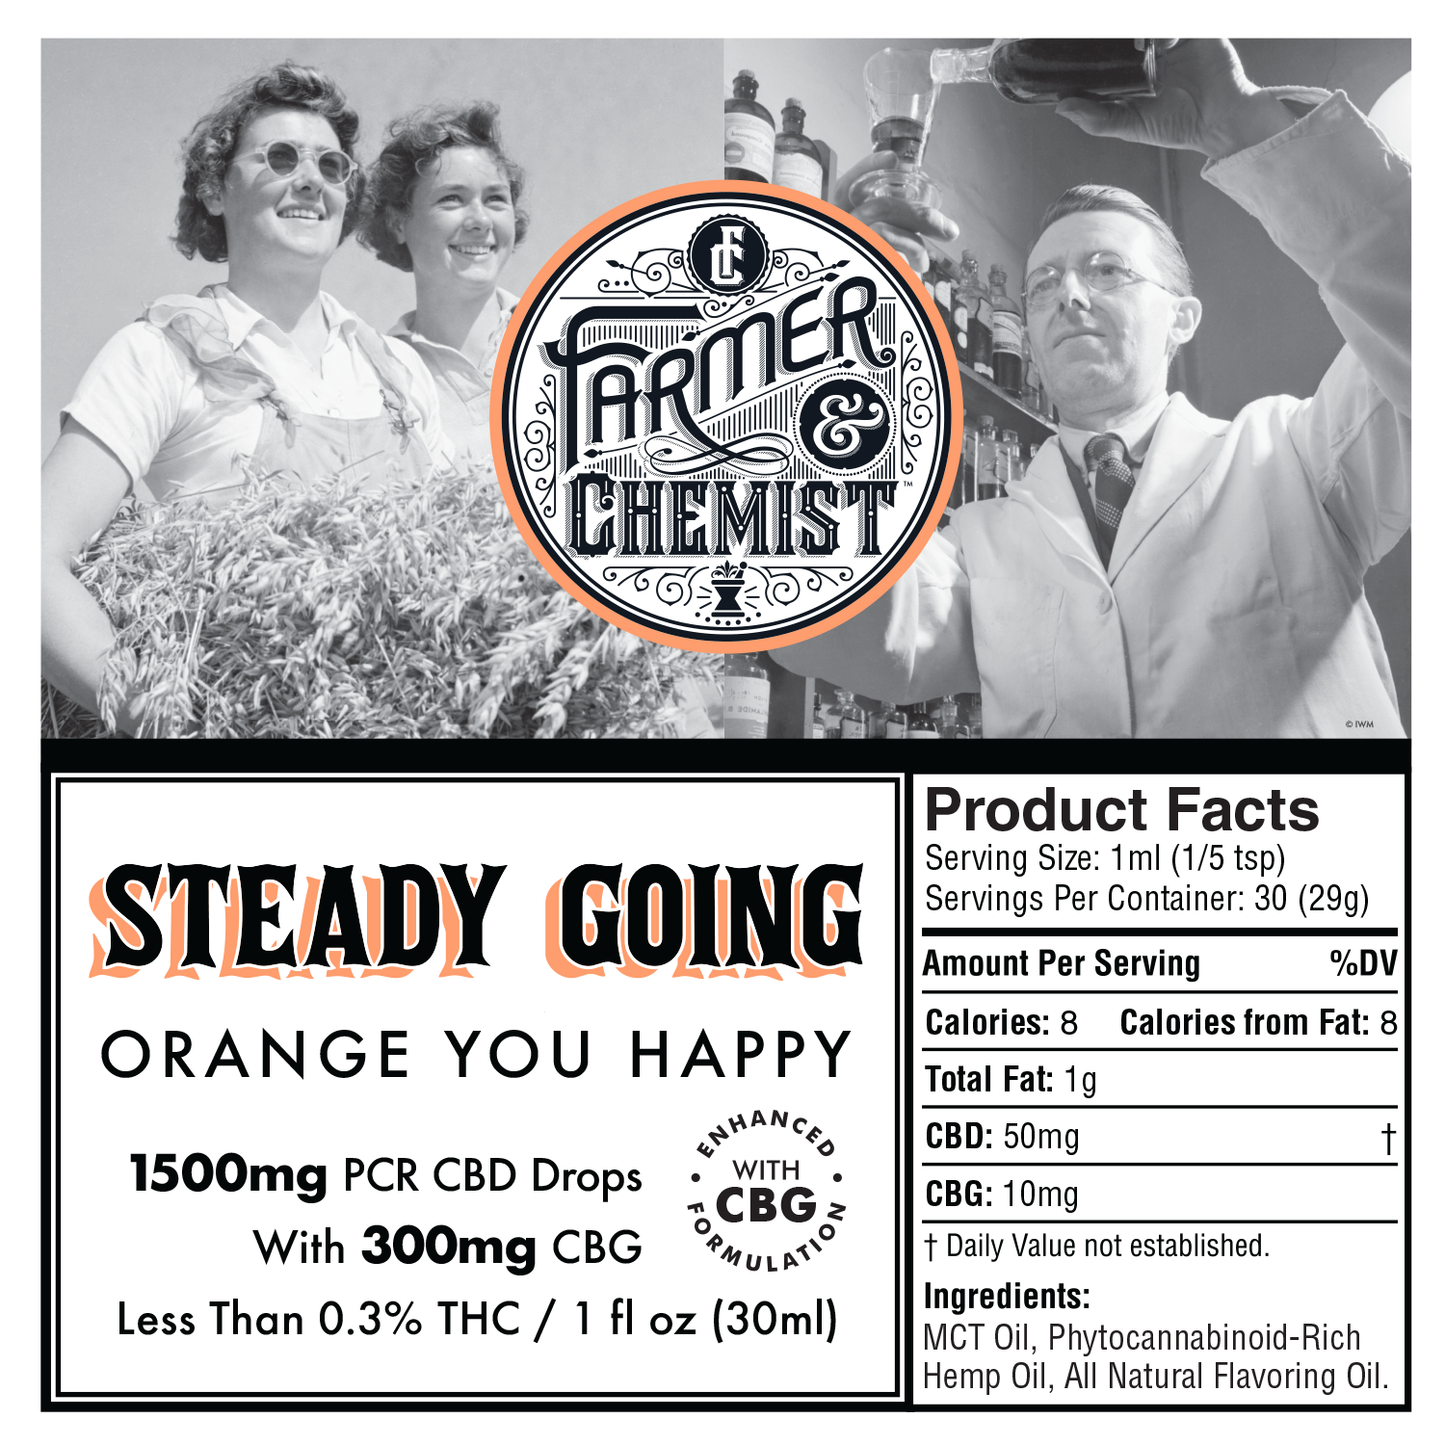 STEADY GOING - Orange You Happy 1500mg CBD / 300mg CBG PCR Tincture (Case pack of 4)